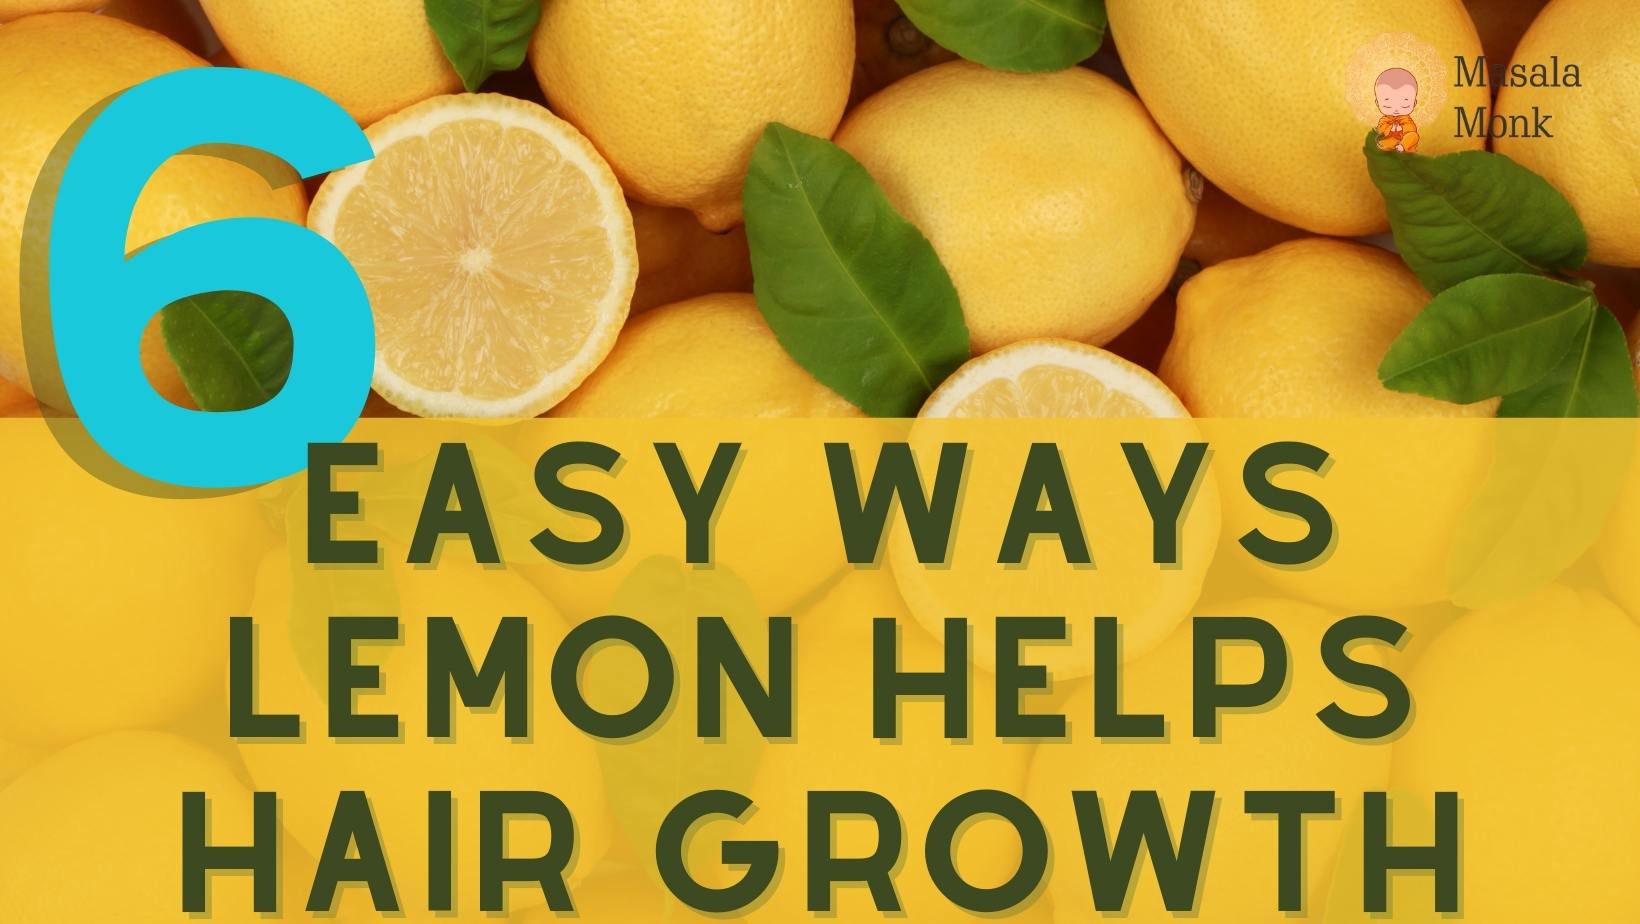 6 Easy Ways Lemon helps Hair Growth - Masala Monk